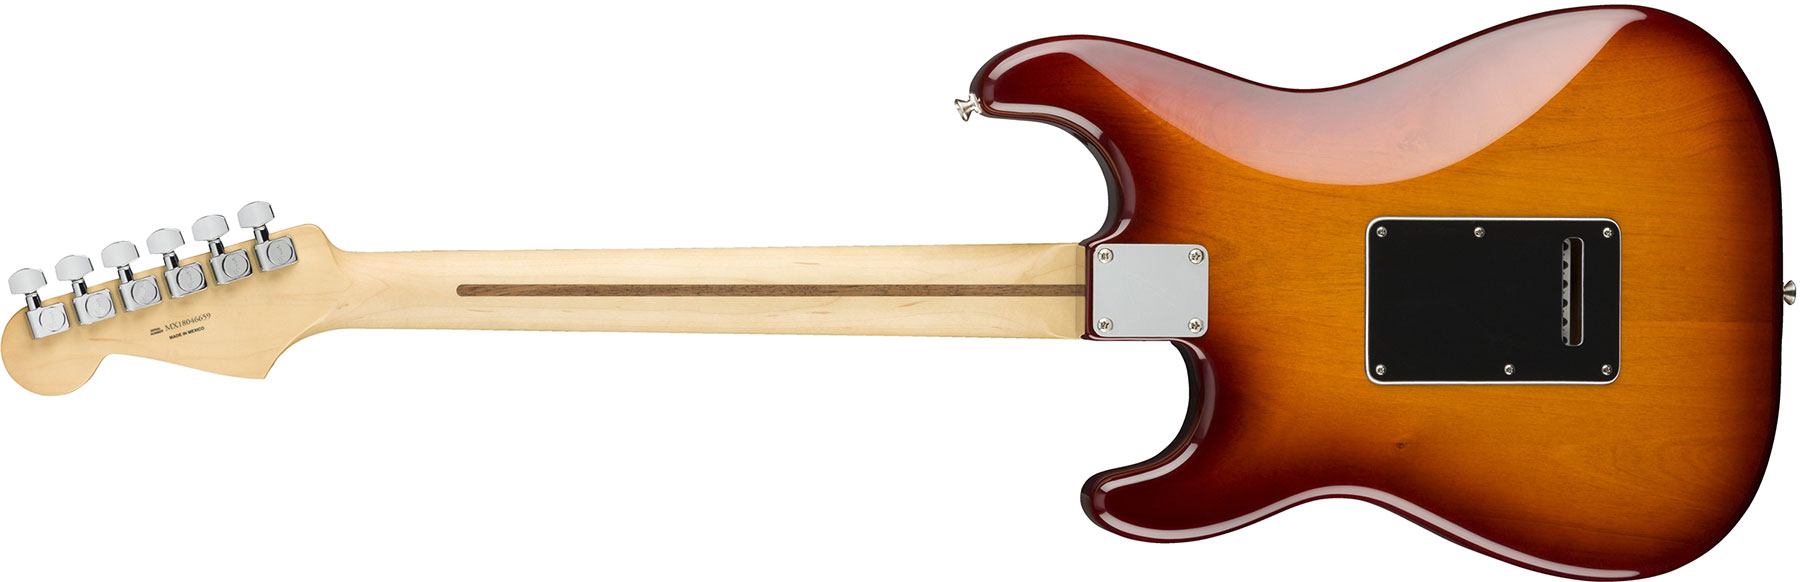 Fender Strat Player Mex Hsh Pf - Tobacco Burst - E-Gitarre in Str-Form - Variation 1